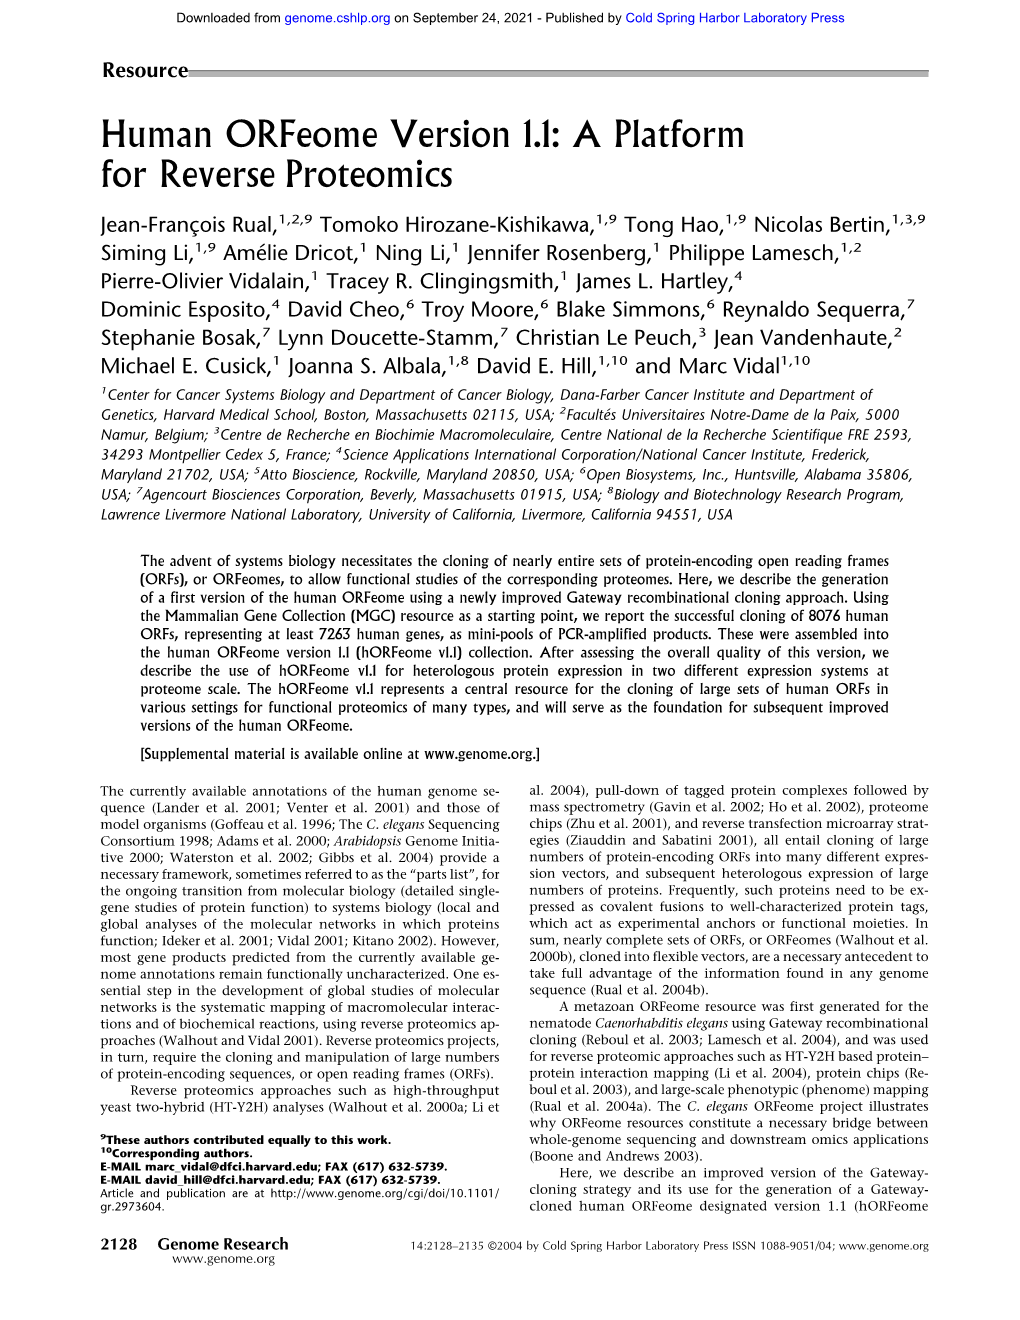 Human Orfeome Version 1.1: a Platform for Reverse Proteomics